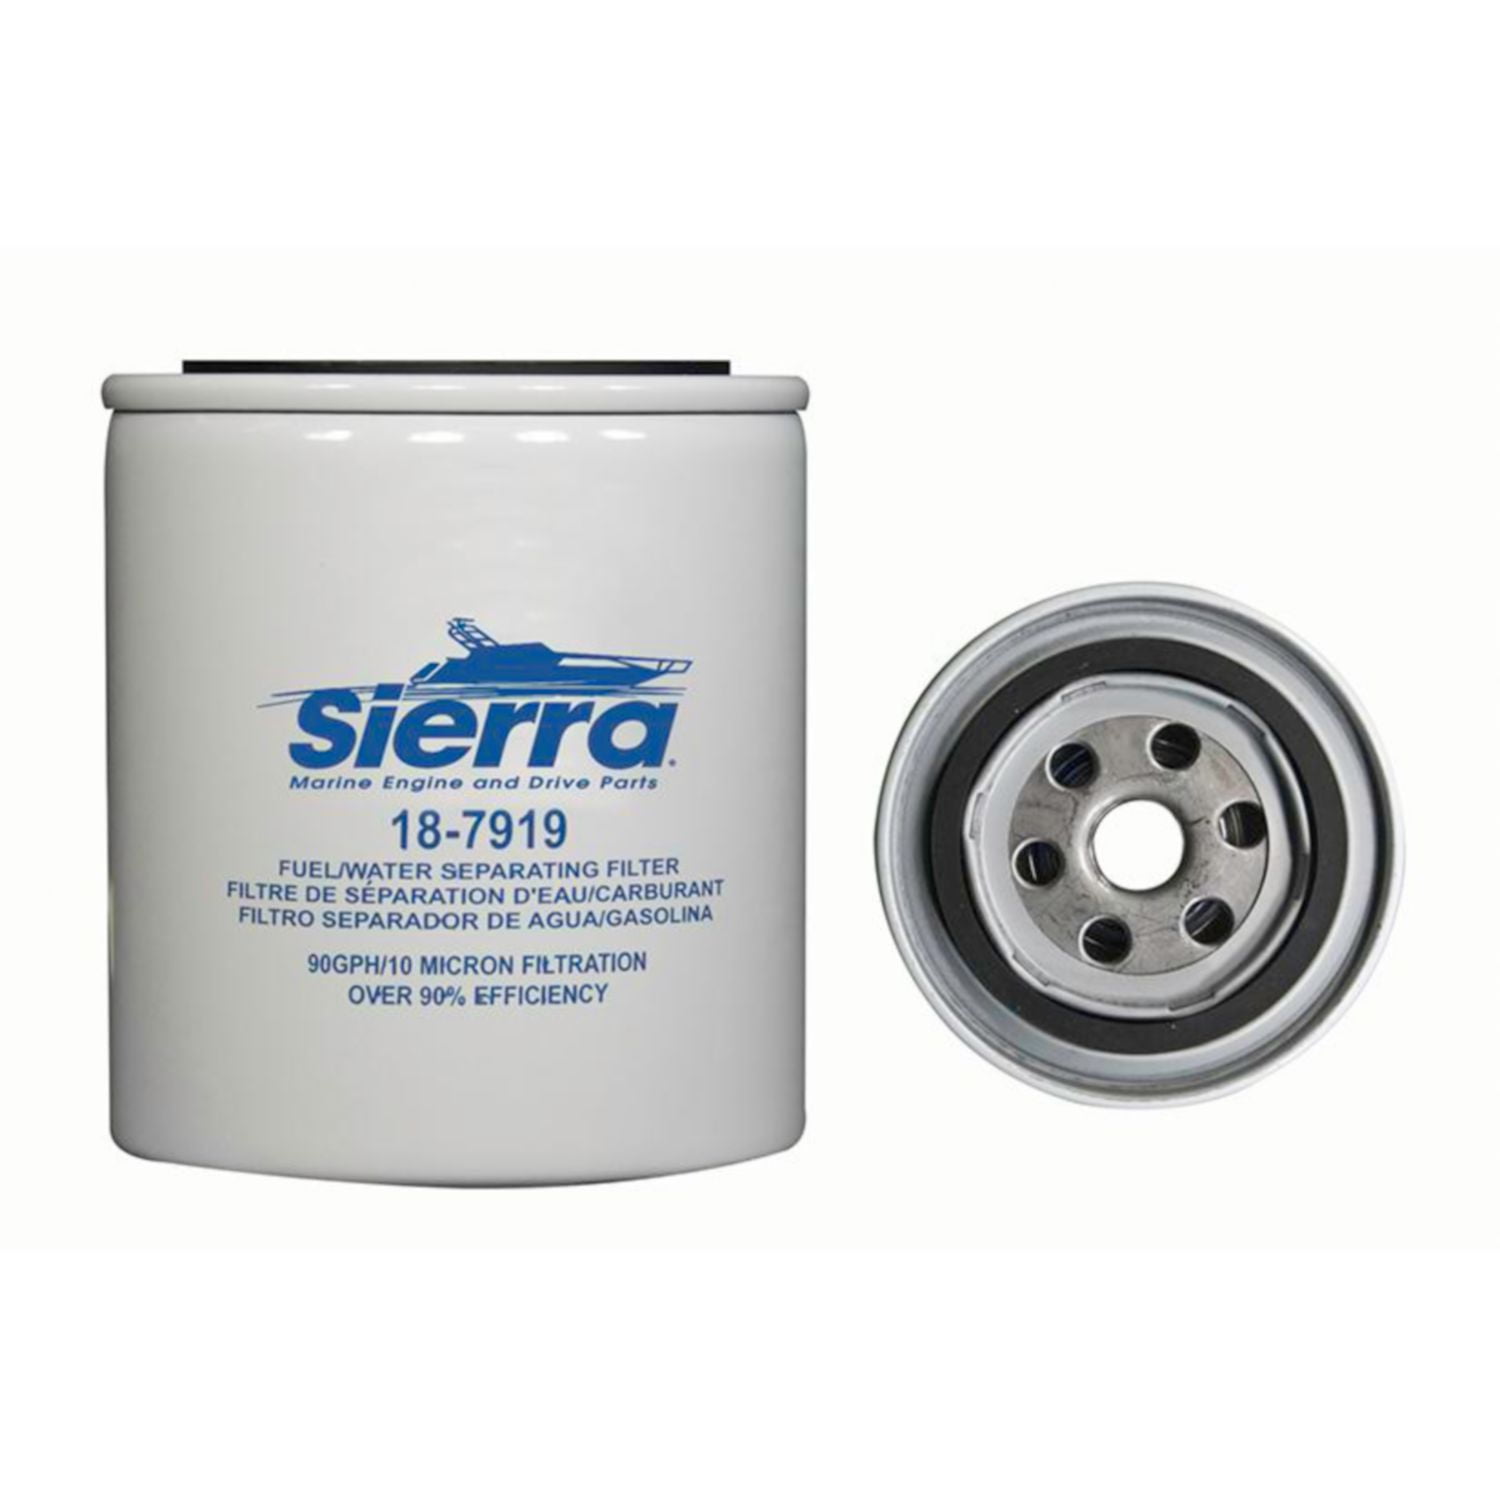 Sierra 18-7919 Fuel Filter